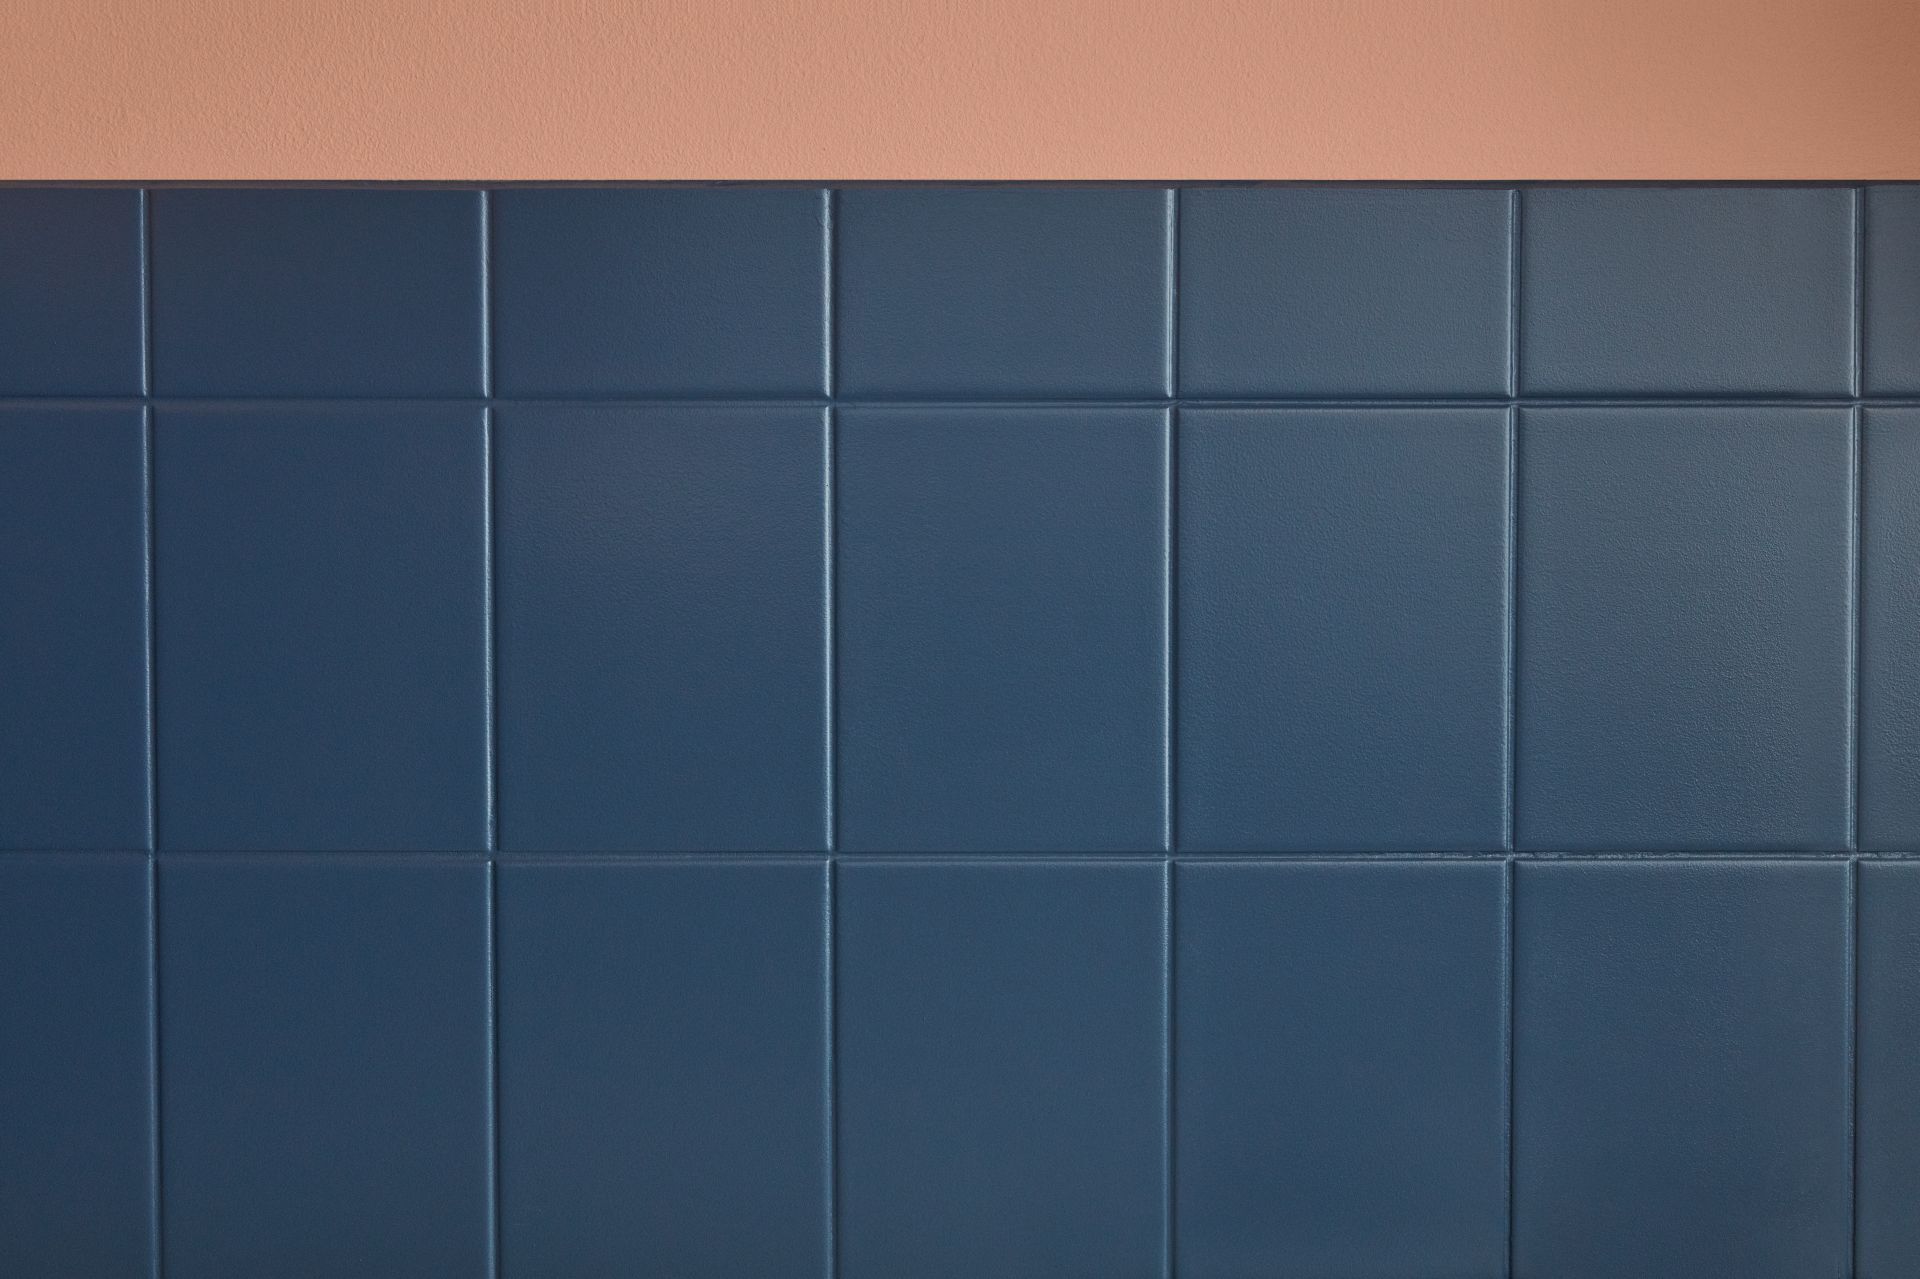 Obkladačky natreté tmavo modrou farbou Luja ceramic tiles